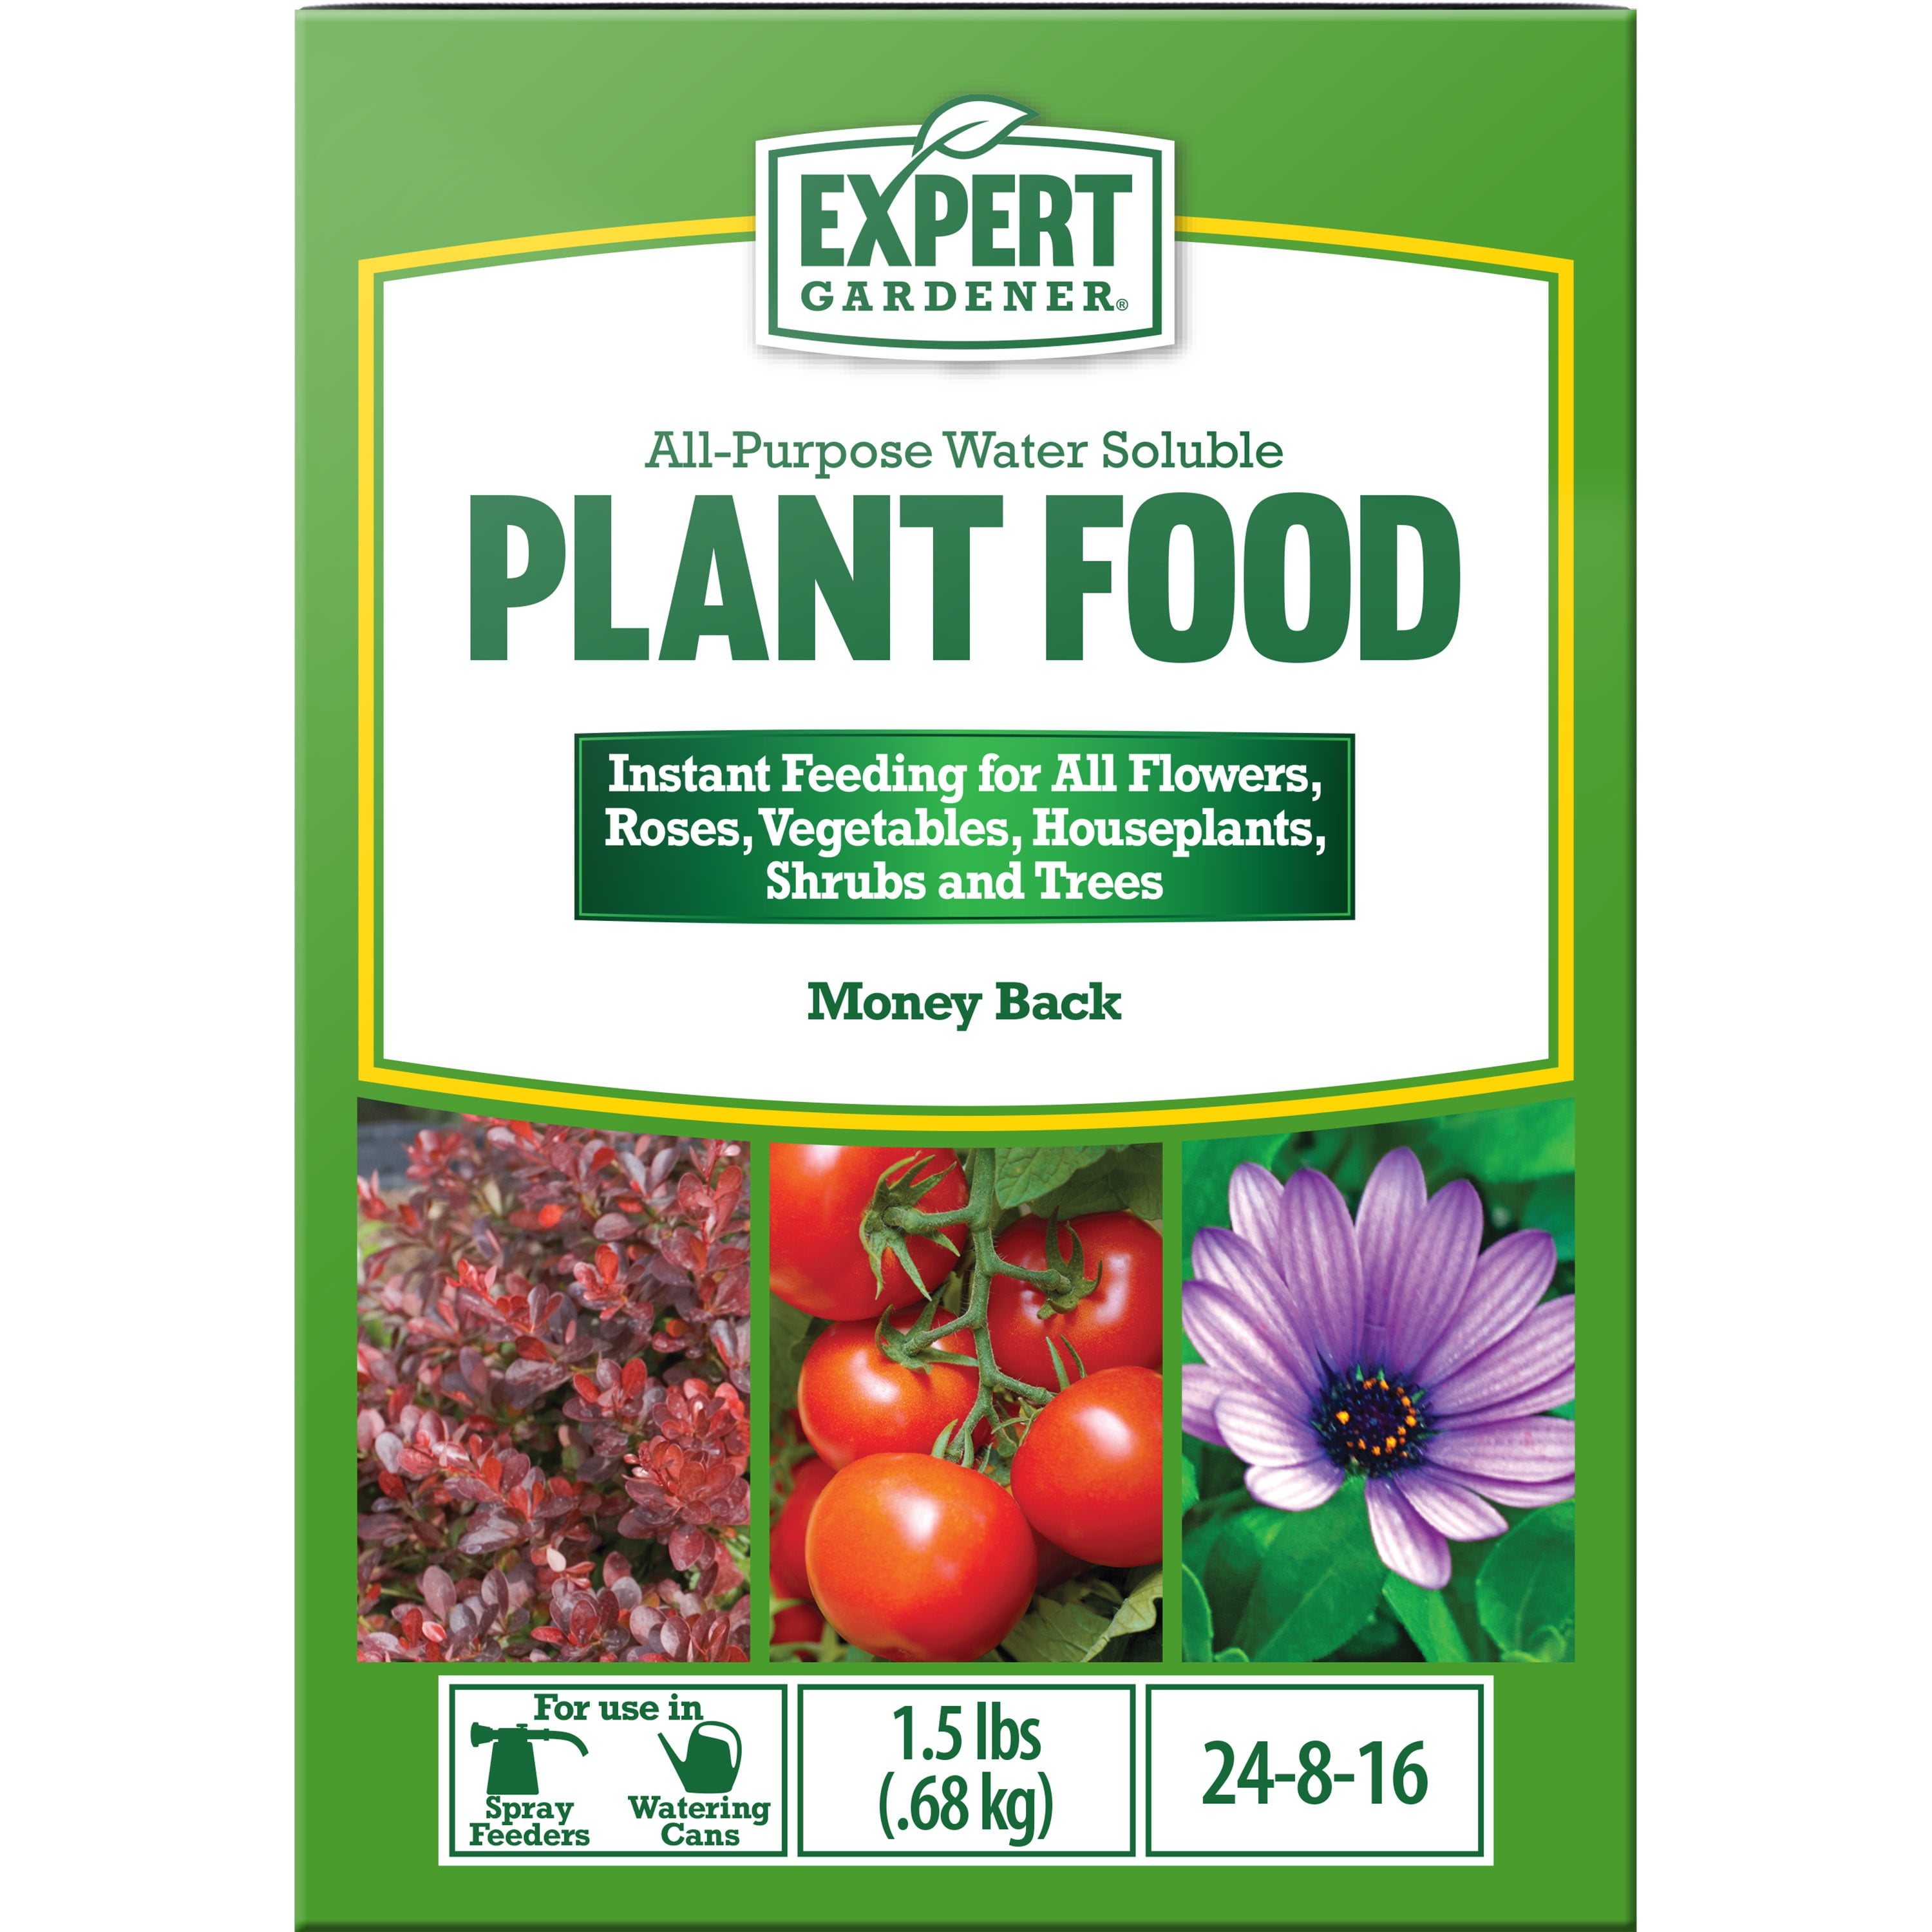 Expert Gardener All-Purpose Water Soluble Plant Food, 24-8-16 Fertilizer, 1.5 lb.